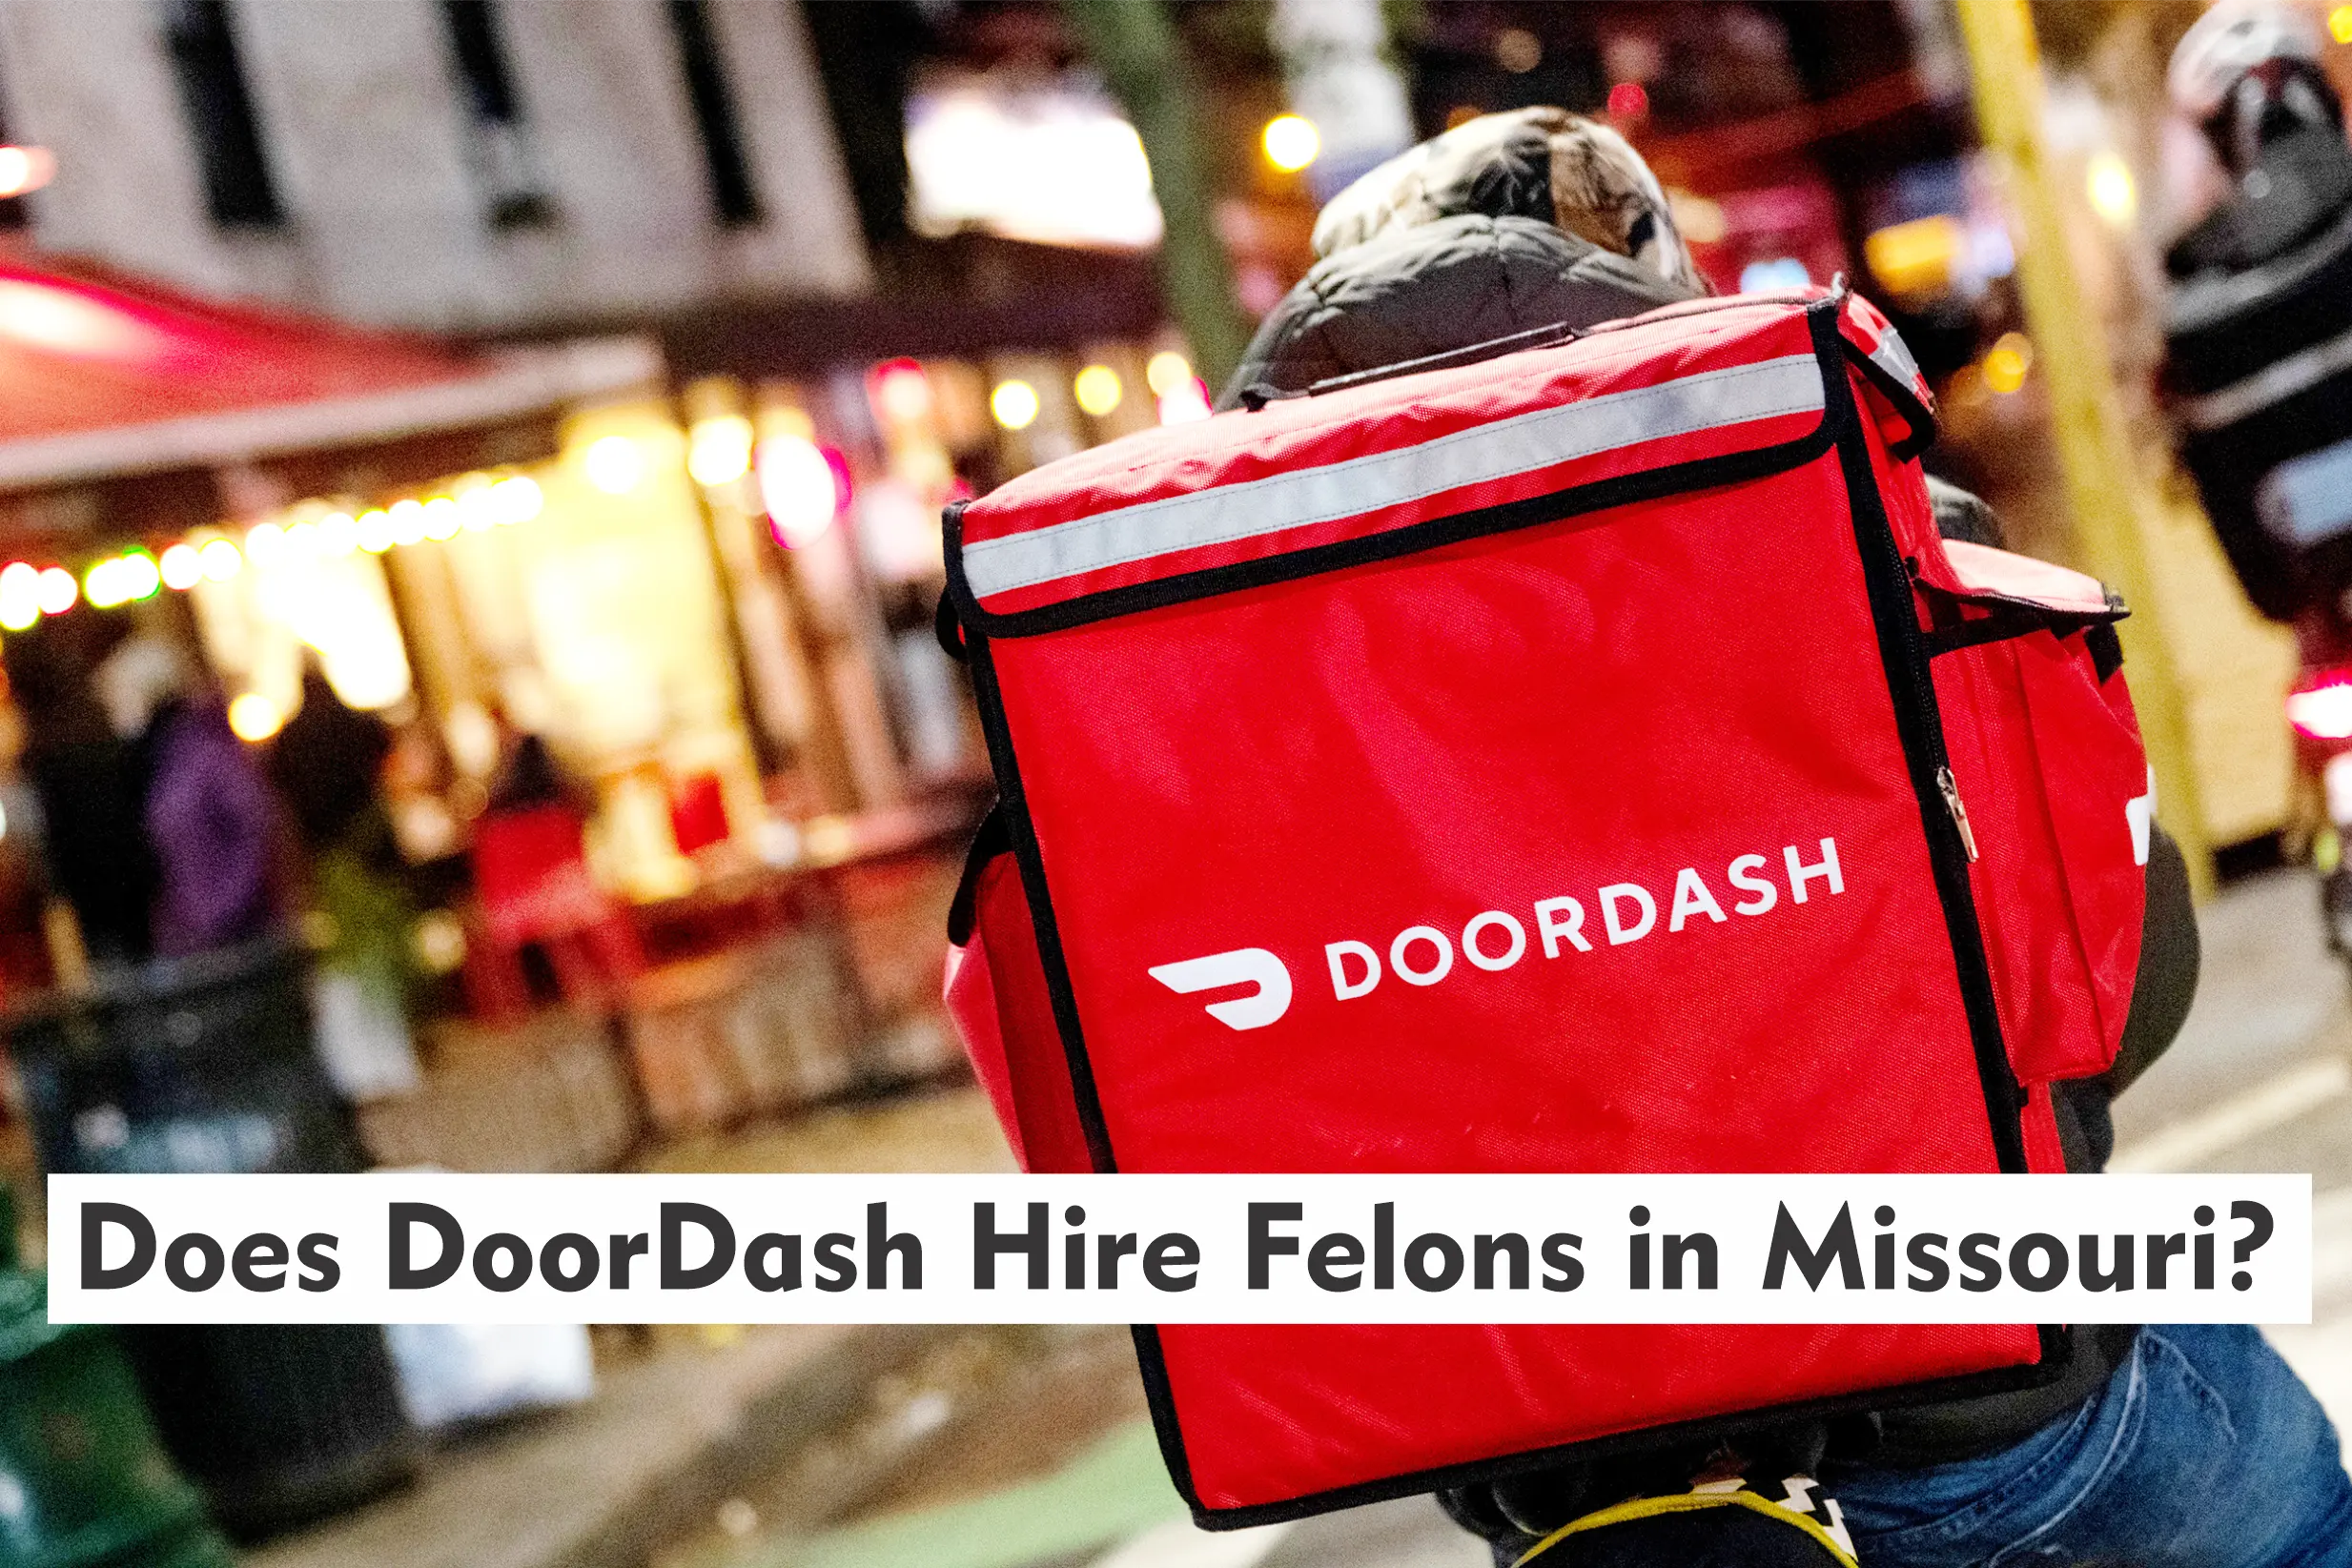 Does DoorDash Hire Felons in Missouri?